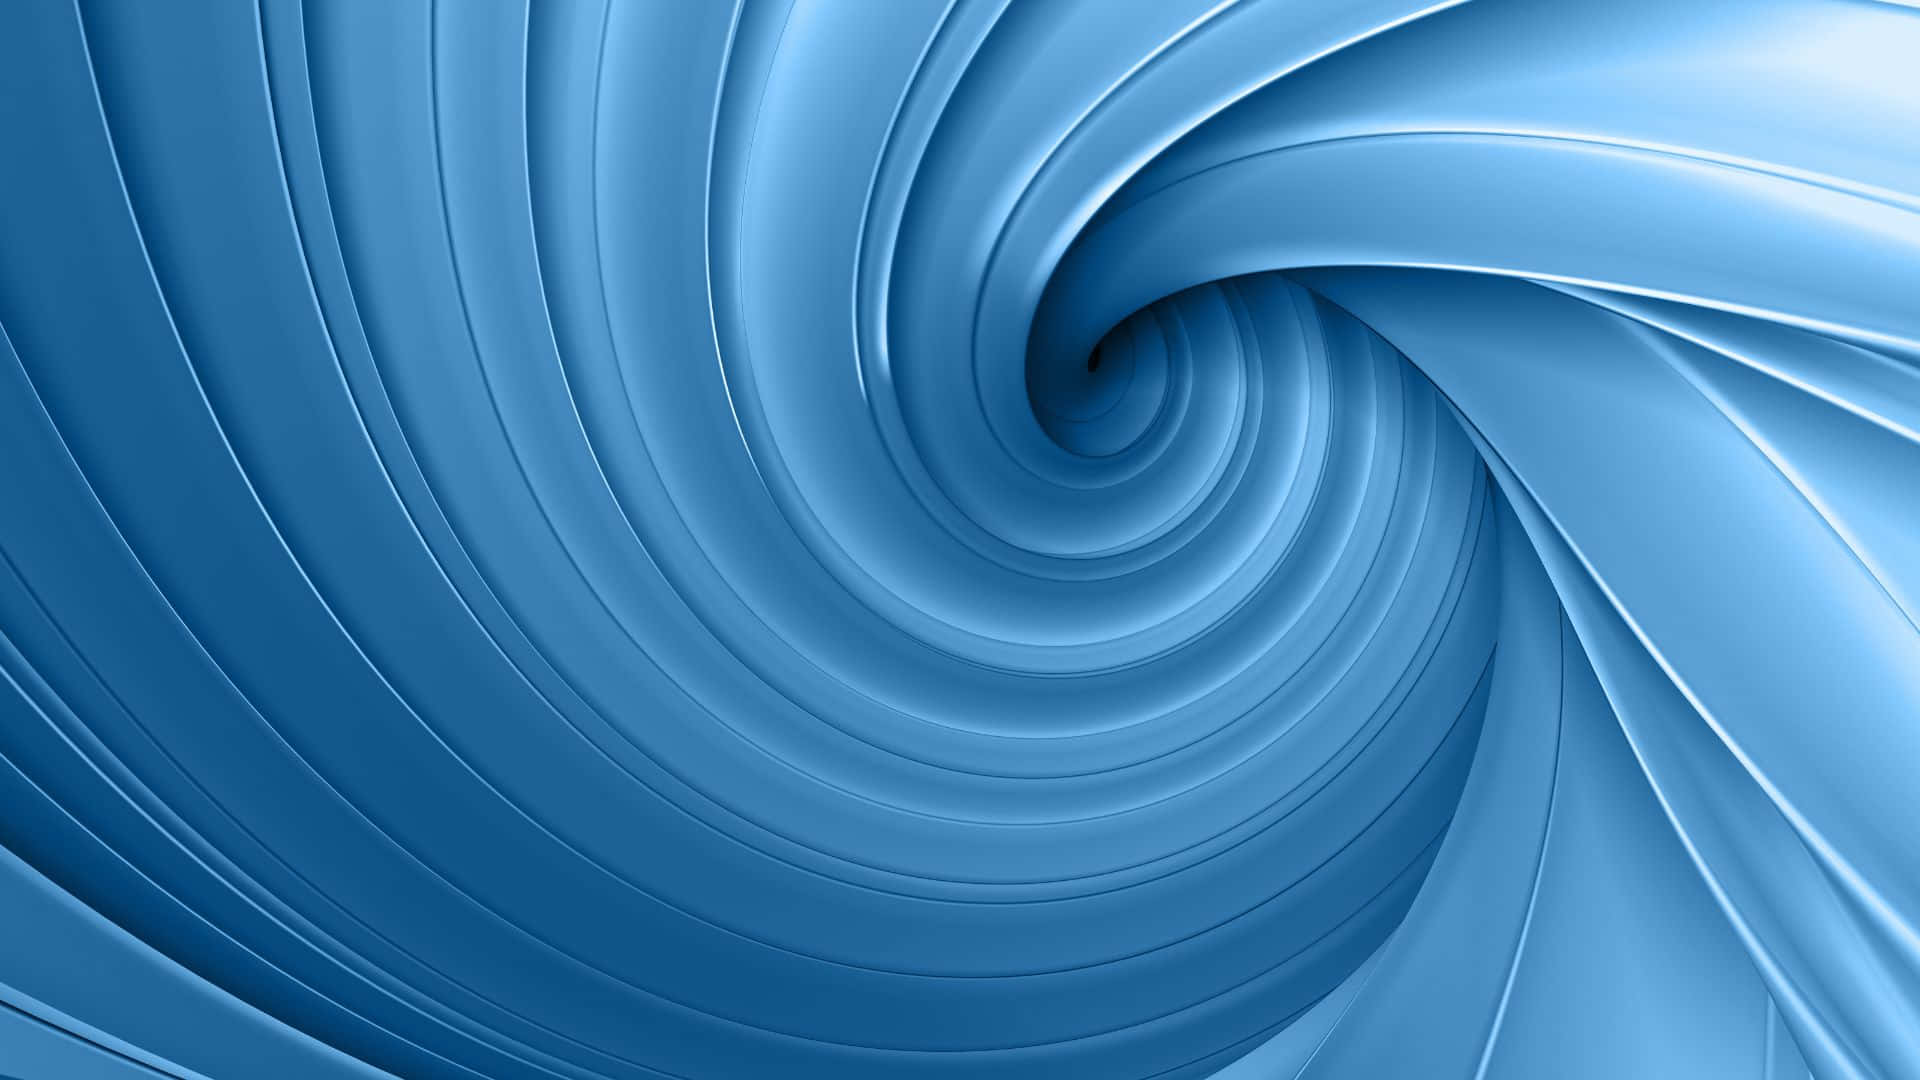 A mesmerizing blue swirl against a black background.